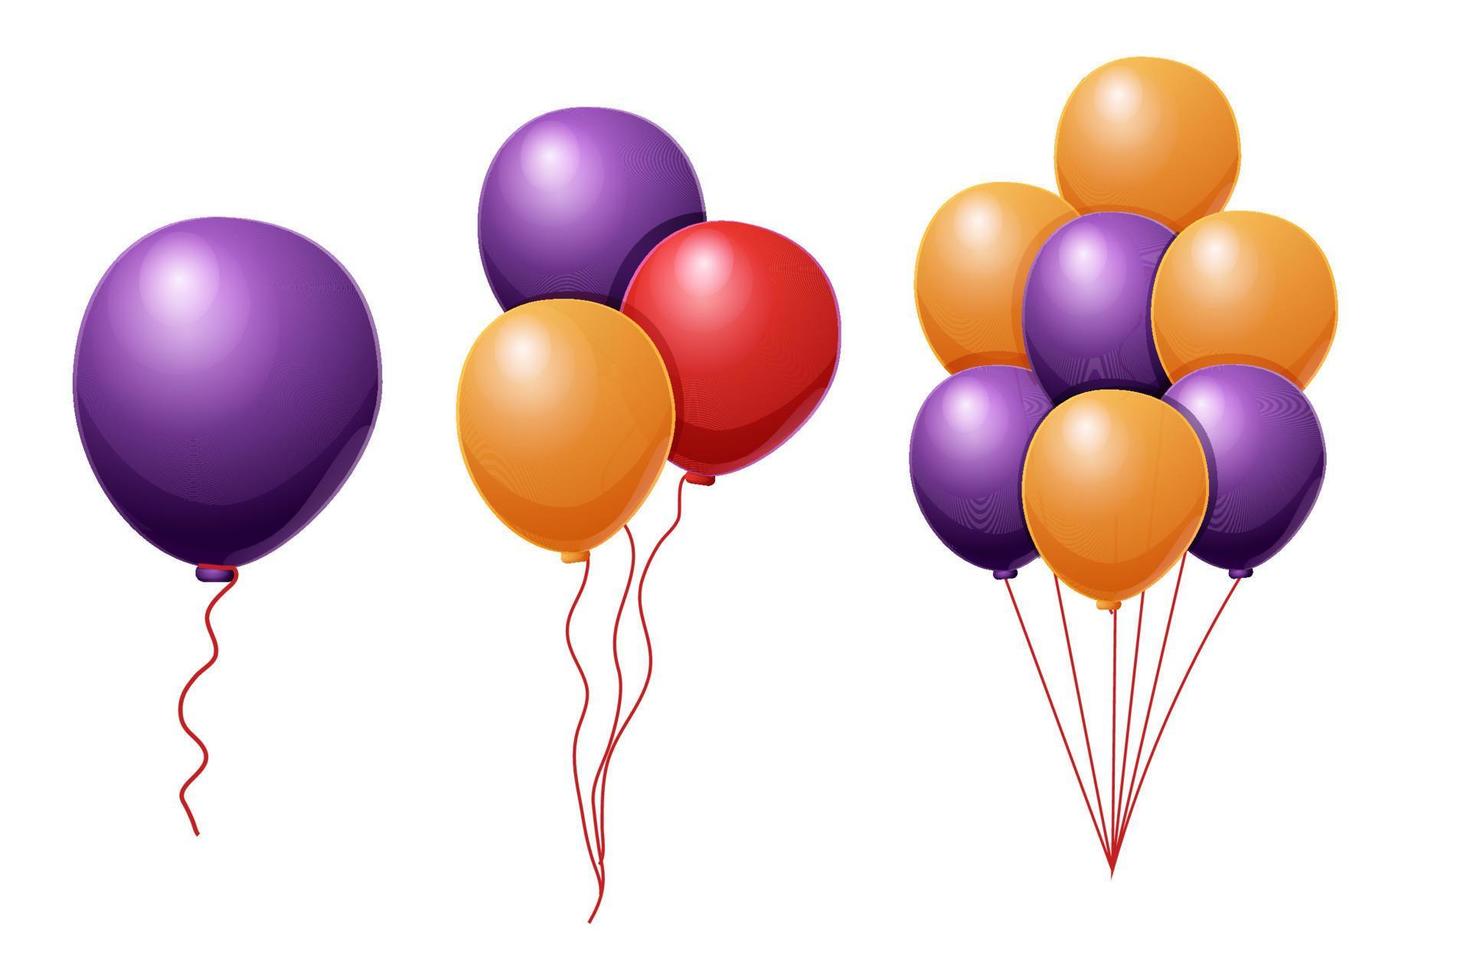 coloque globos coloridos de colección de fiestas con arco en estilo de dibujos animados aislado sobre fondo blanco. ilustración vectorial vector